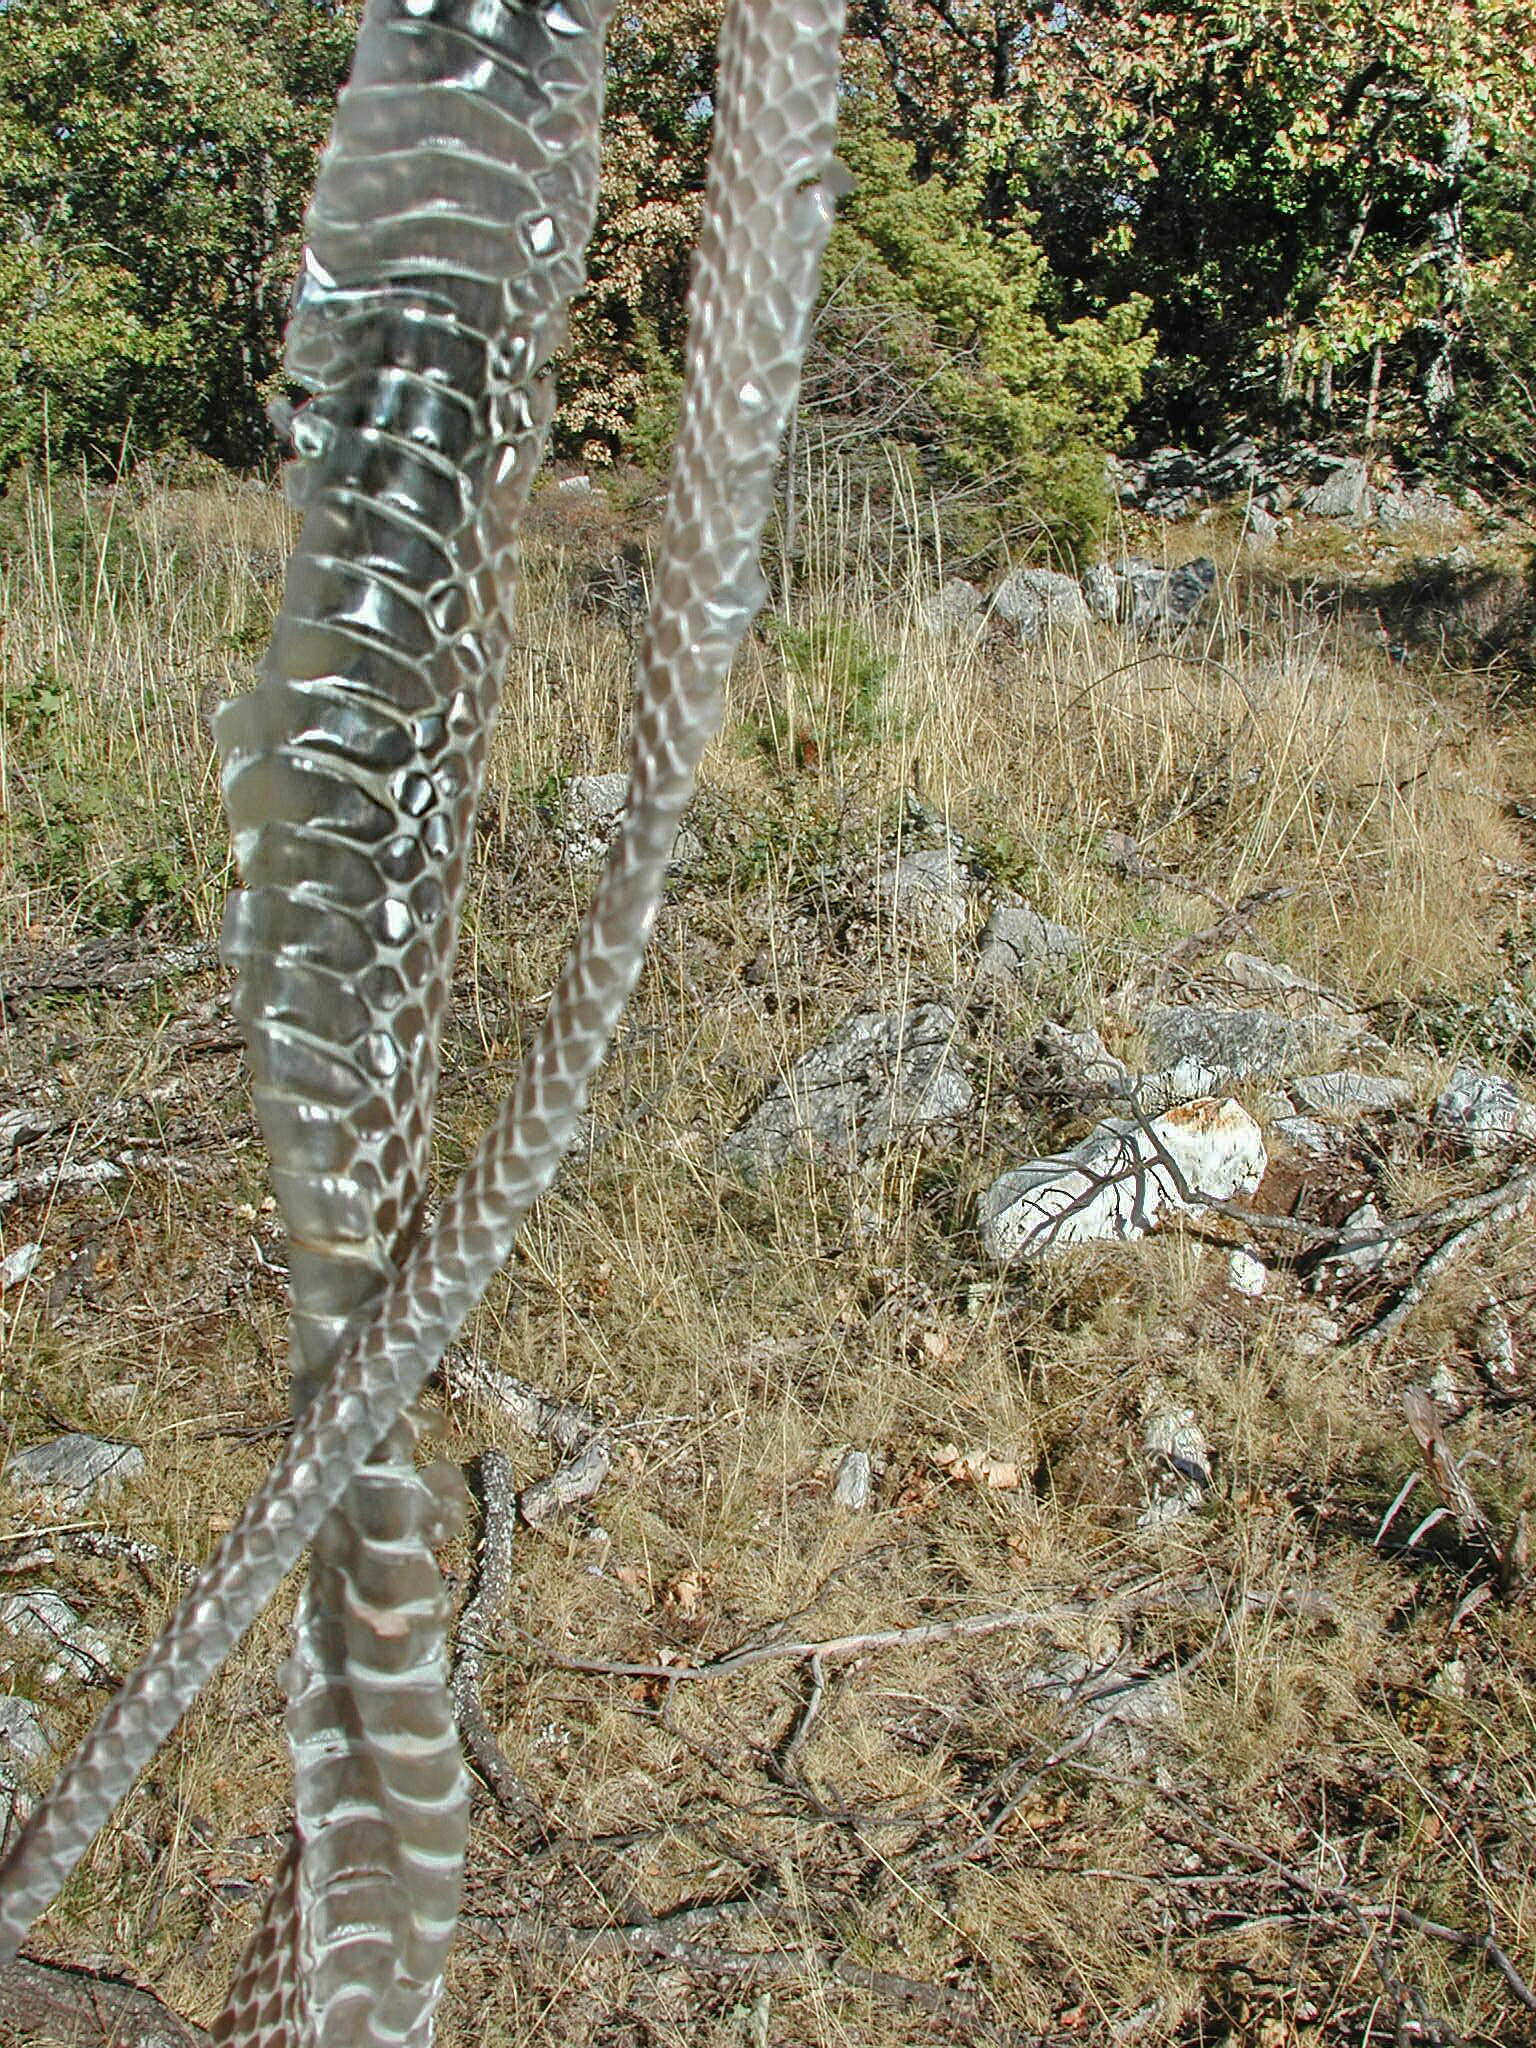 Image of Montpellier Snake